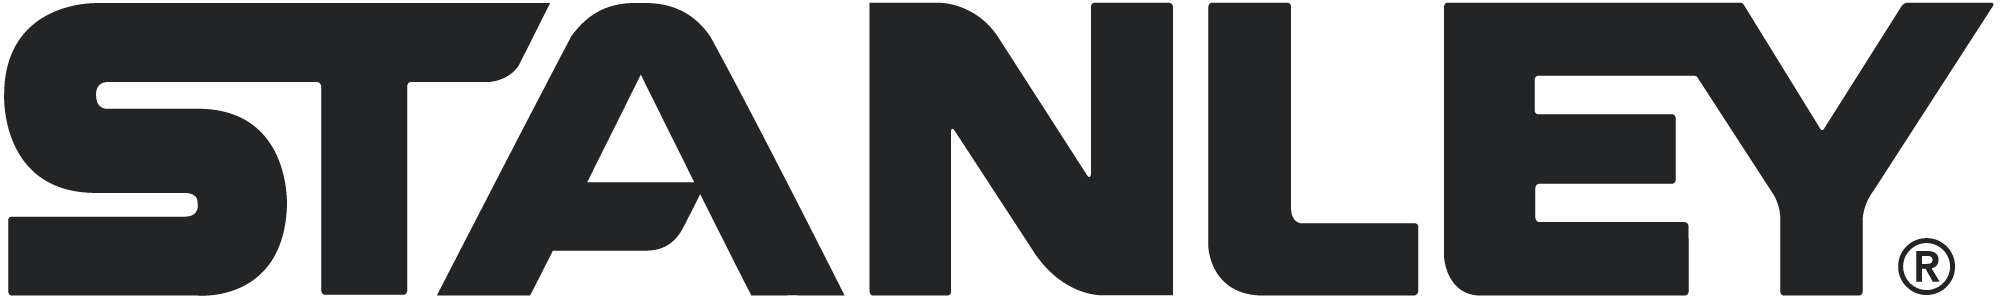 Stanley Logo PNG images